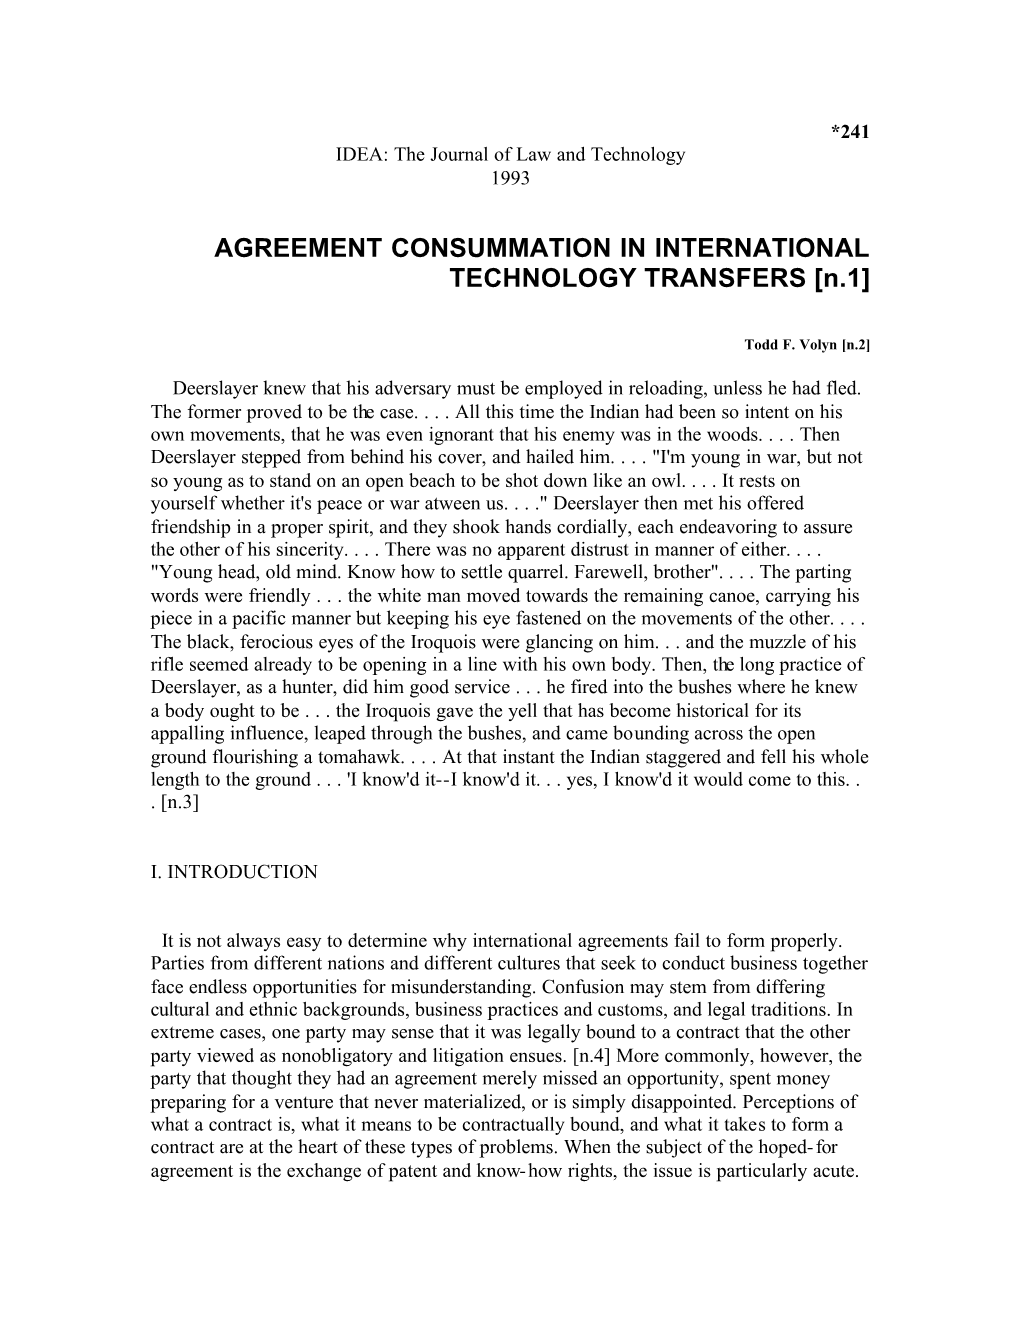 AGREEMENT CONSUMMATION in INTERNATIONAL TECHNOLOGY TRANSFERS [N.1]